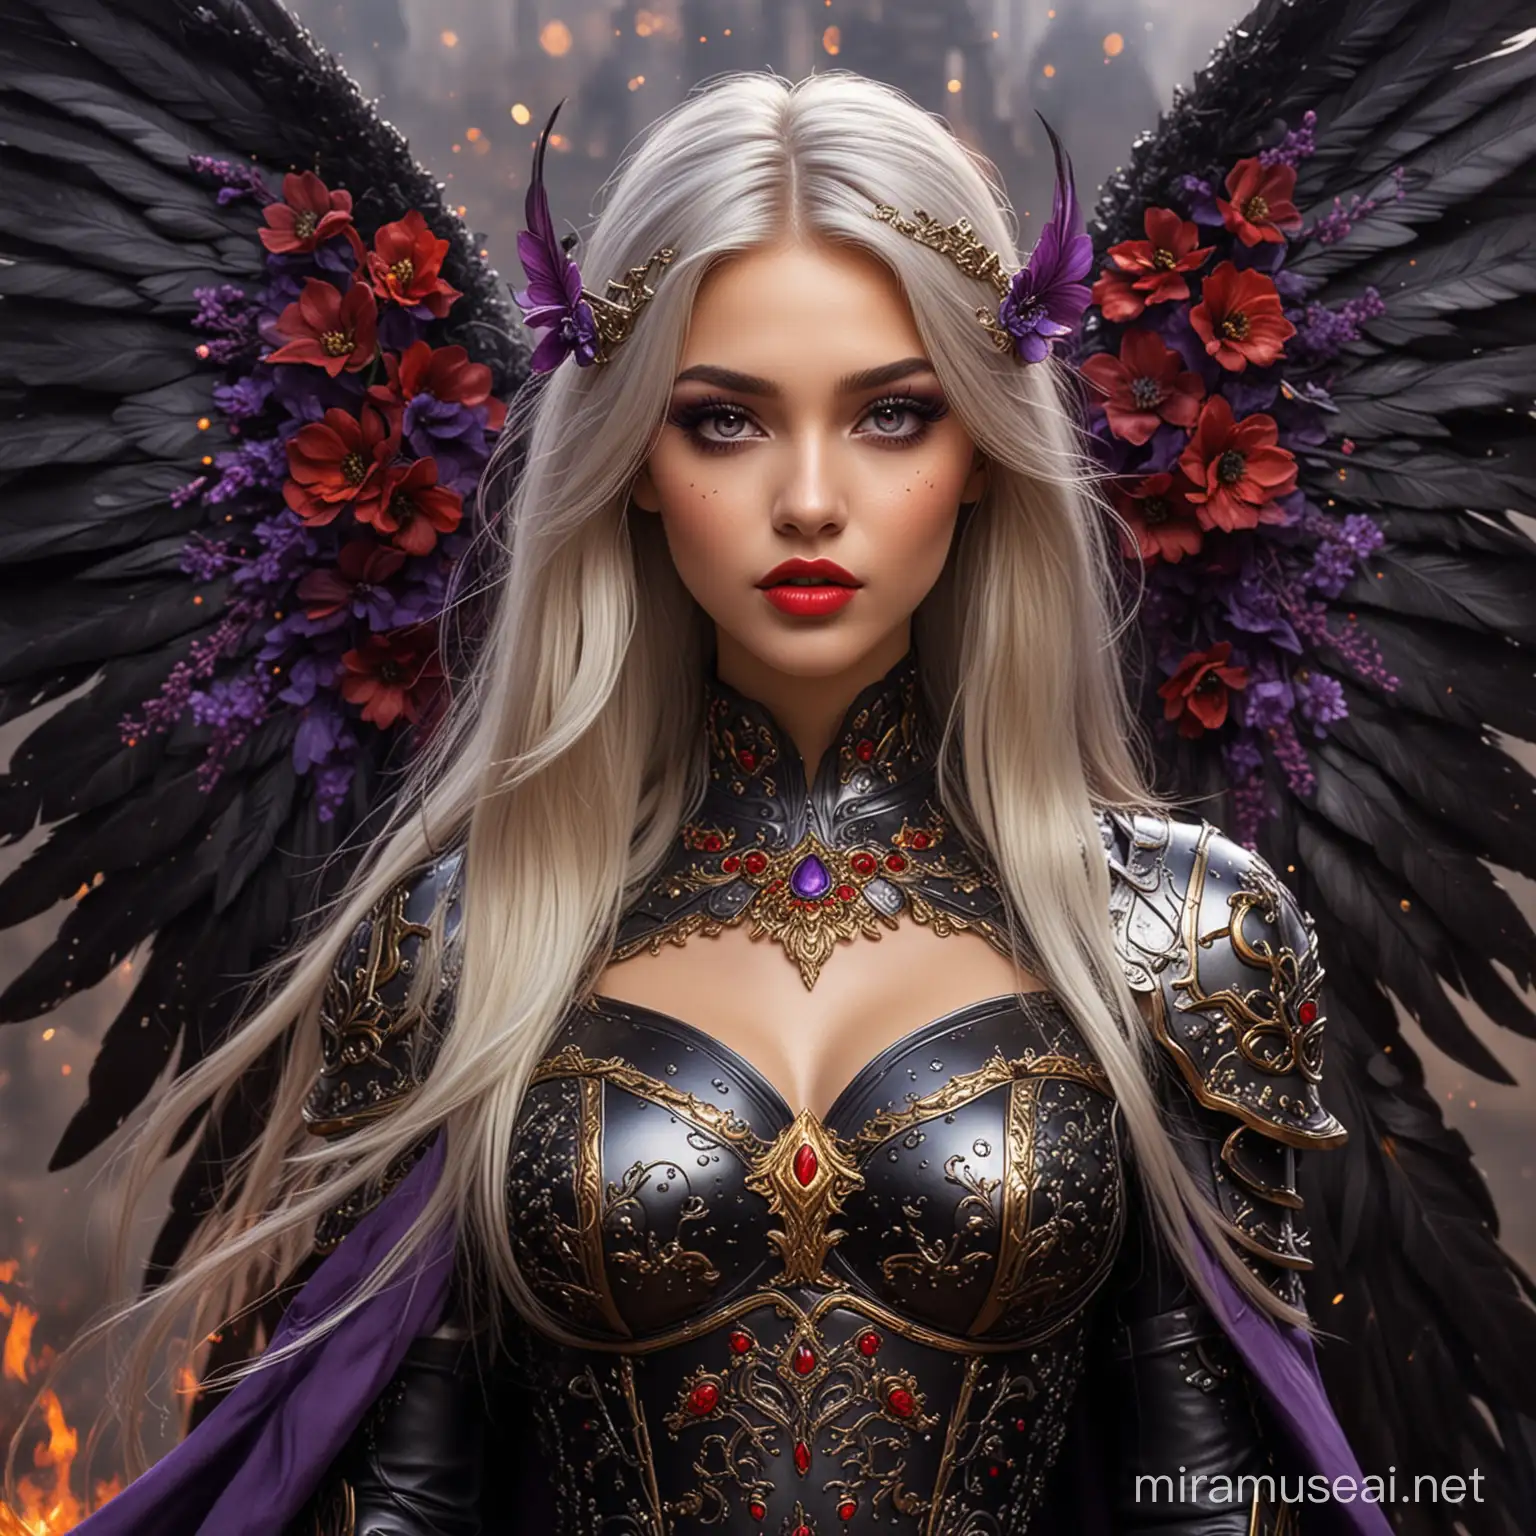 Fantasy Cartoon Enchanting Goddess in Vachirian Steel Armor with Wings of Glittering Darkness